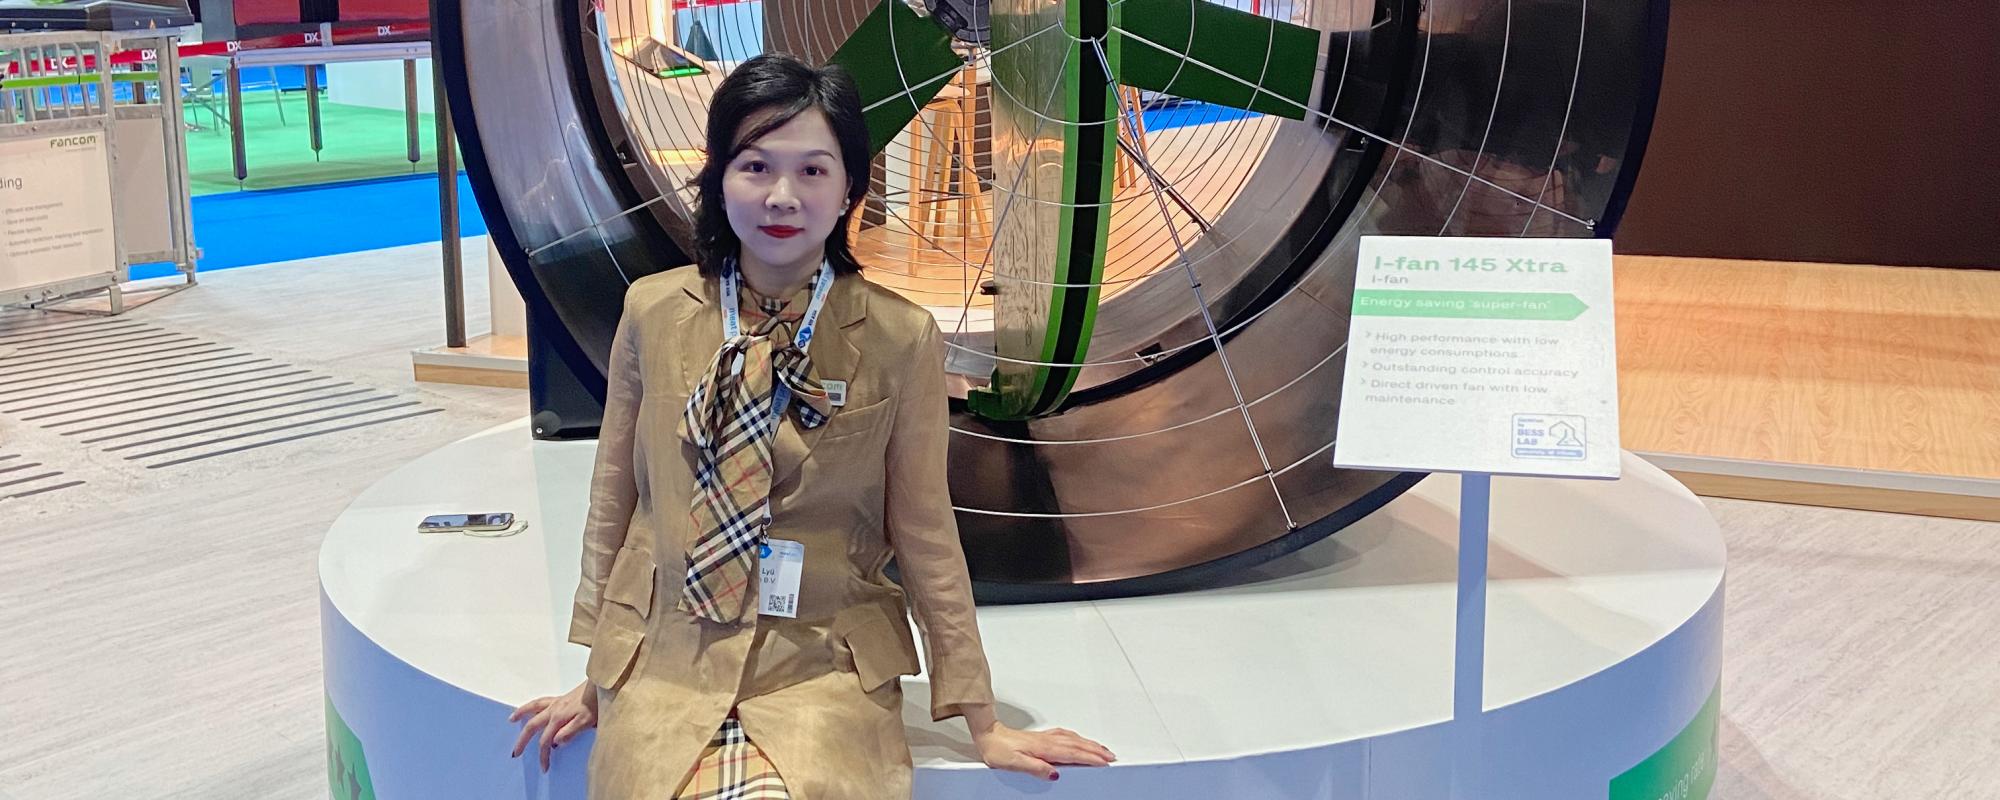 Meet Chanyuan Lyu (Helen), Fancoms new Chinese colleague